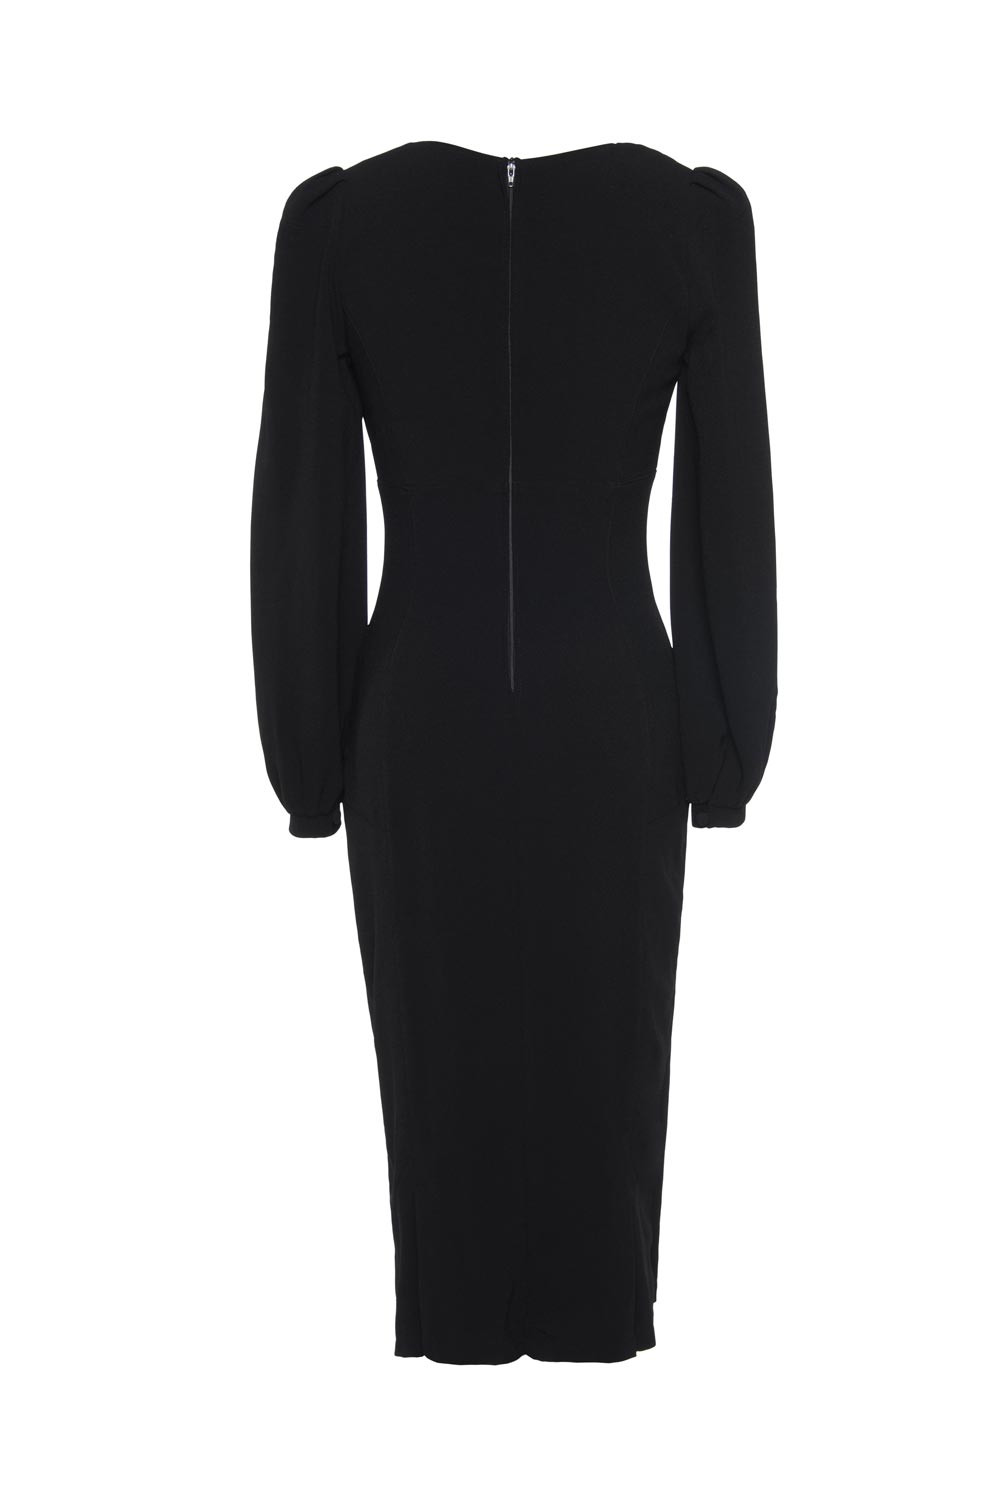 Rachel Dress in Black by Traci Lords